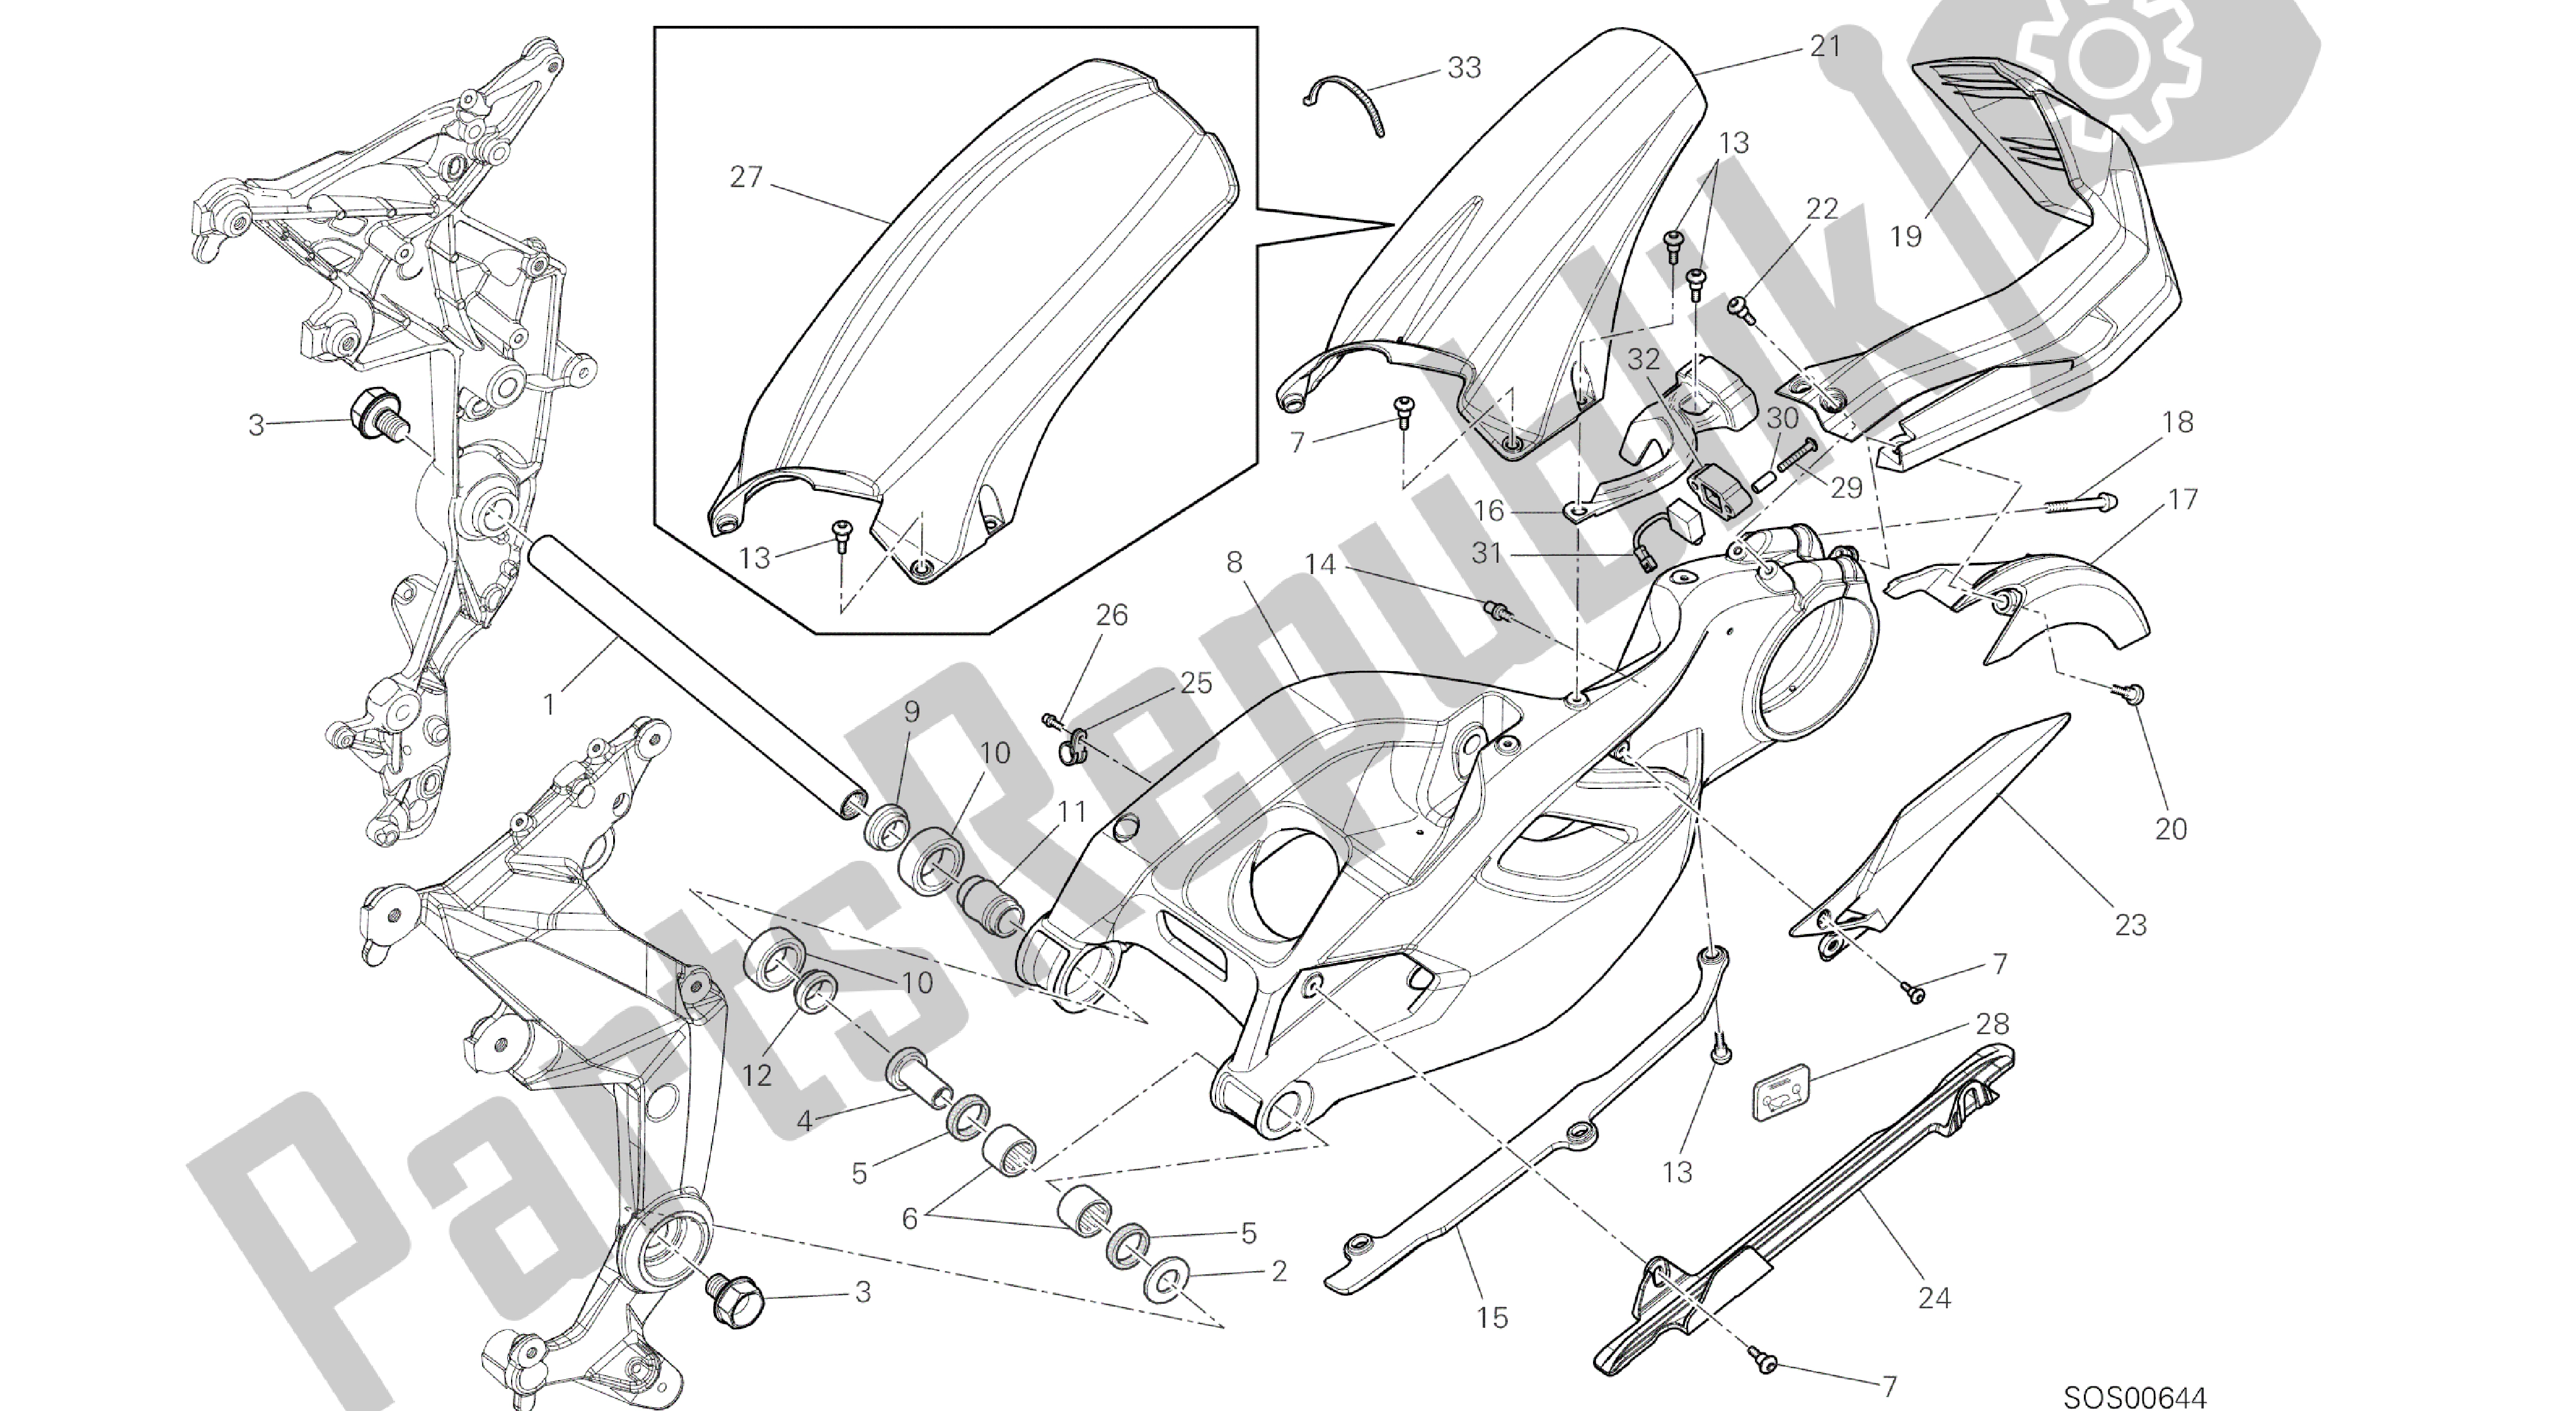 Todas las partes para Dibujo 28a - Brazo Oscilante [mod: Ms1200st; Xst: Marco De Grupo Aus, Chn, Eur, Fra, Jap, Tha] de Ducati Multistrada S Touring 1200 2014